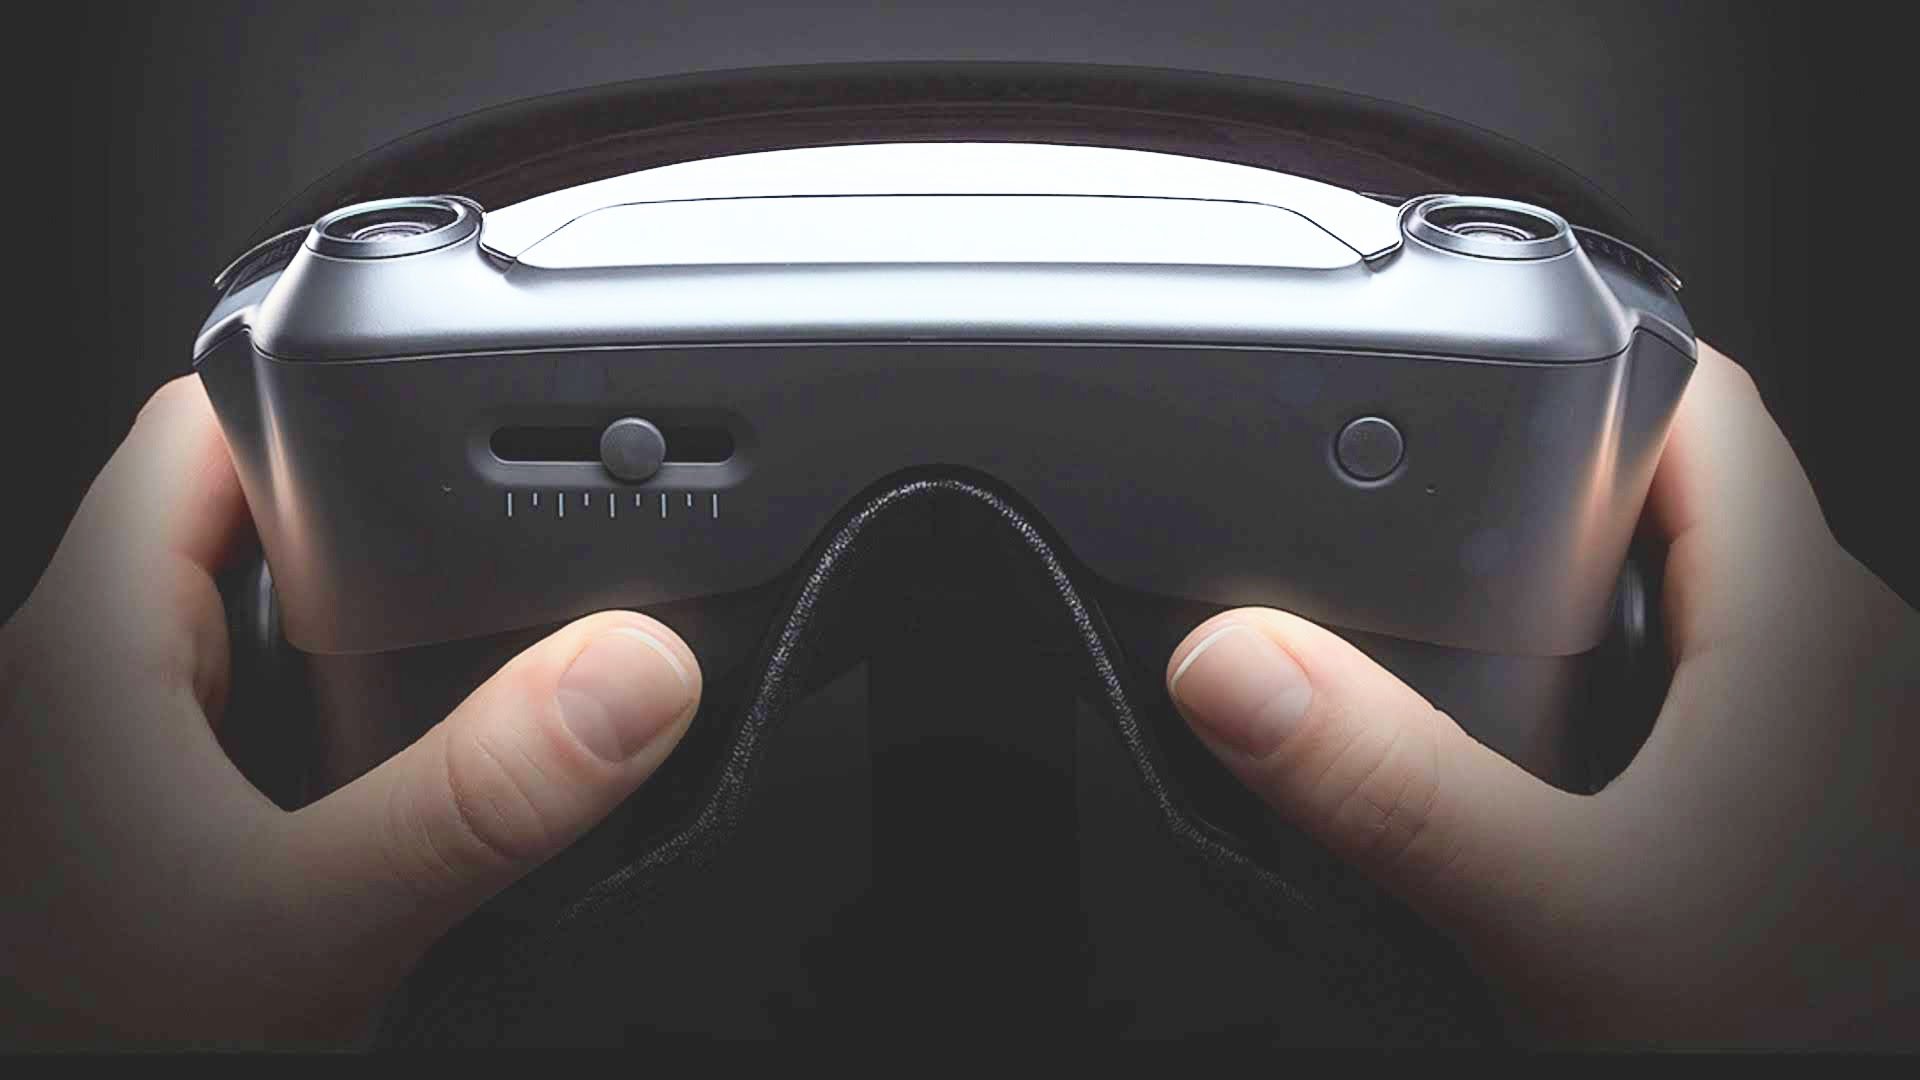 Valve Index hands-on: Impressive, expensive, inconvenient VR